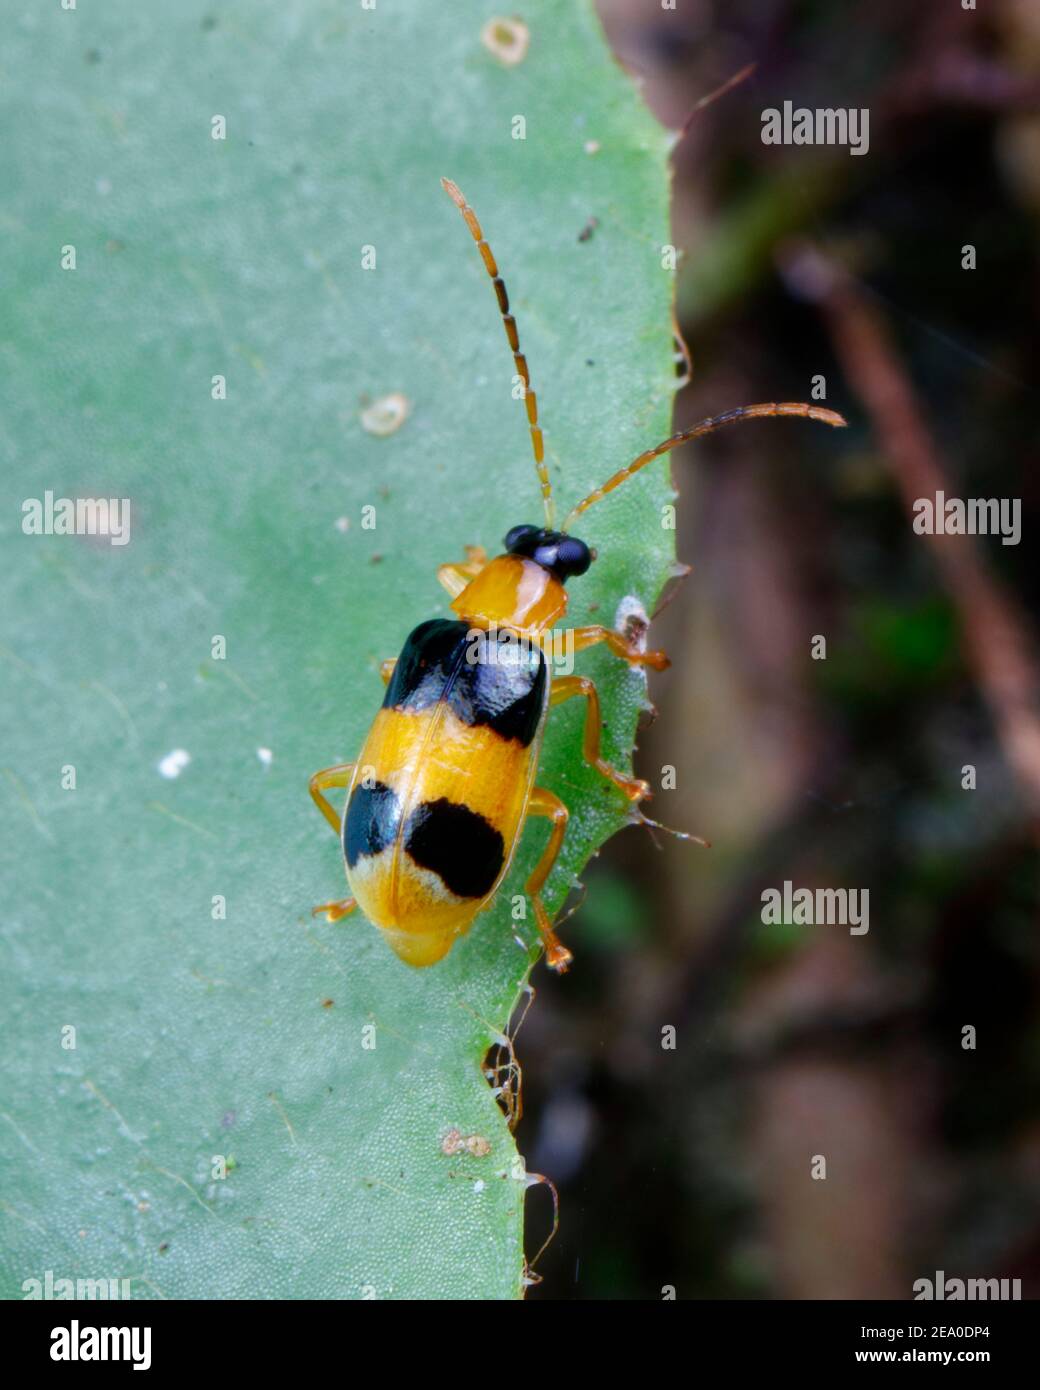 A Leaf beetle, Diabrotica sp,  crawling on a leaf. Stock Photo